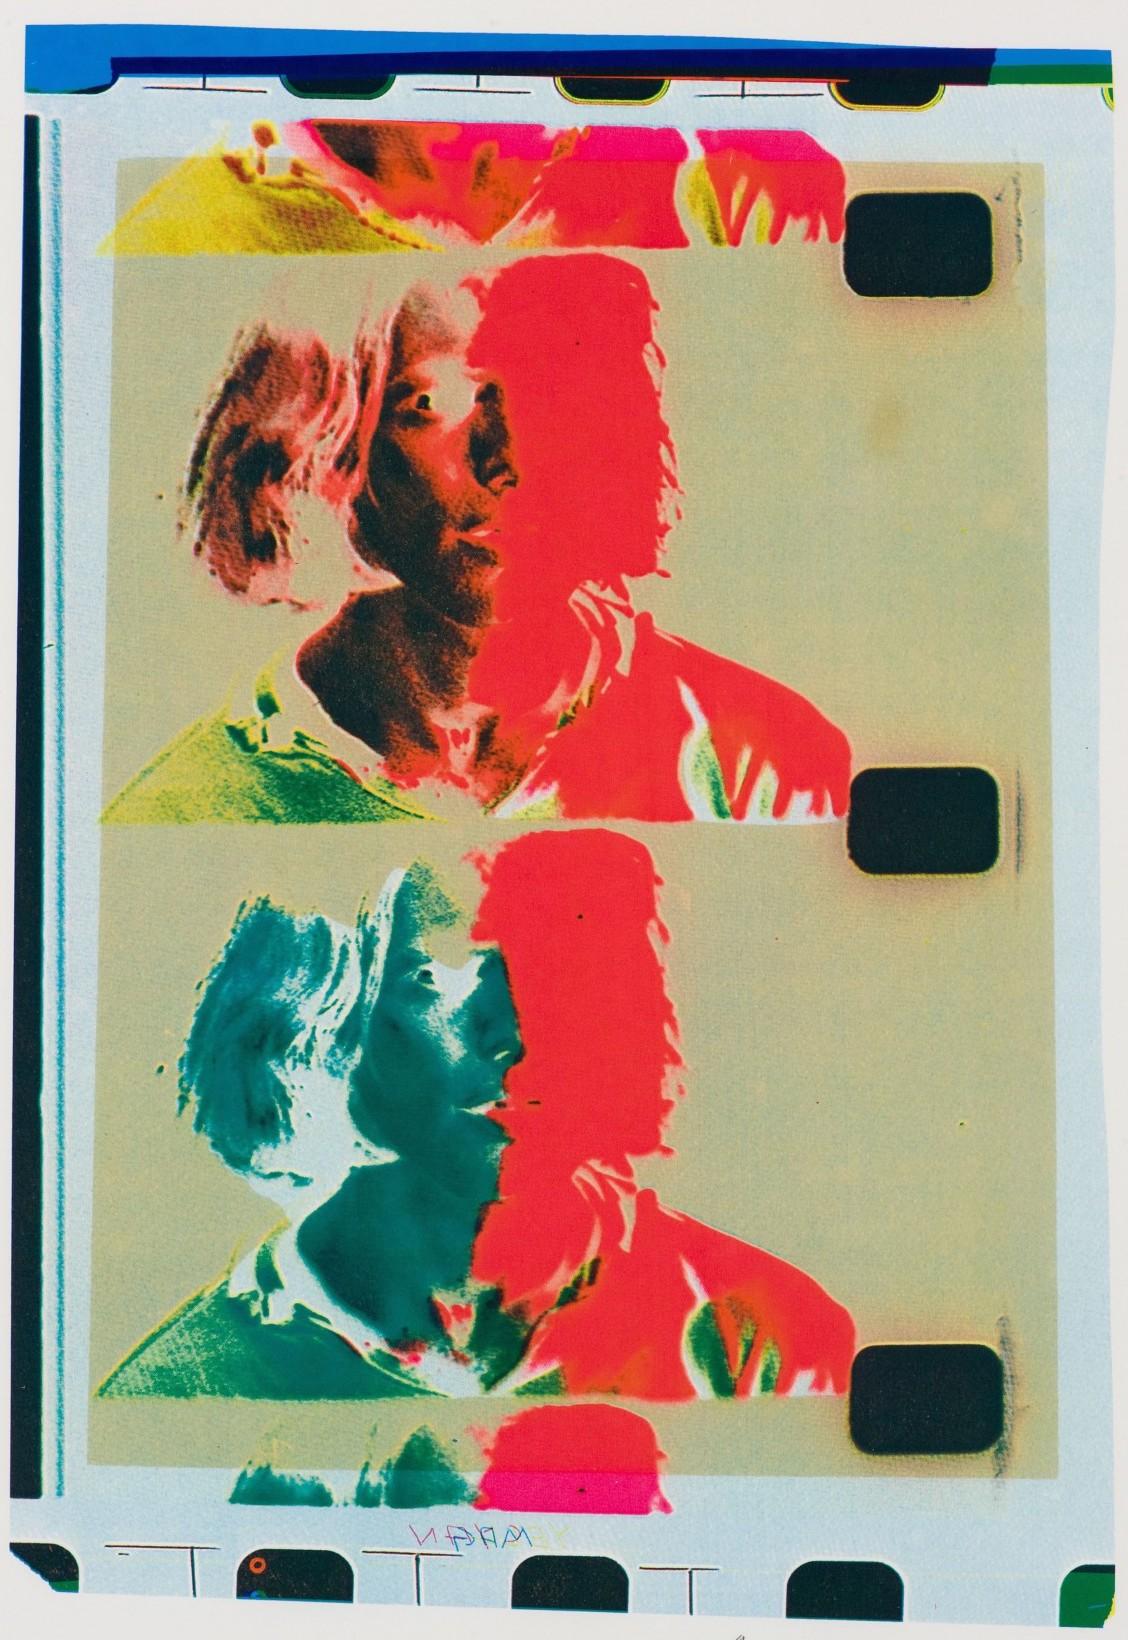 Eric Emerson (Chelsea Girls) (FS II.287)  - Print by Andy Warhol